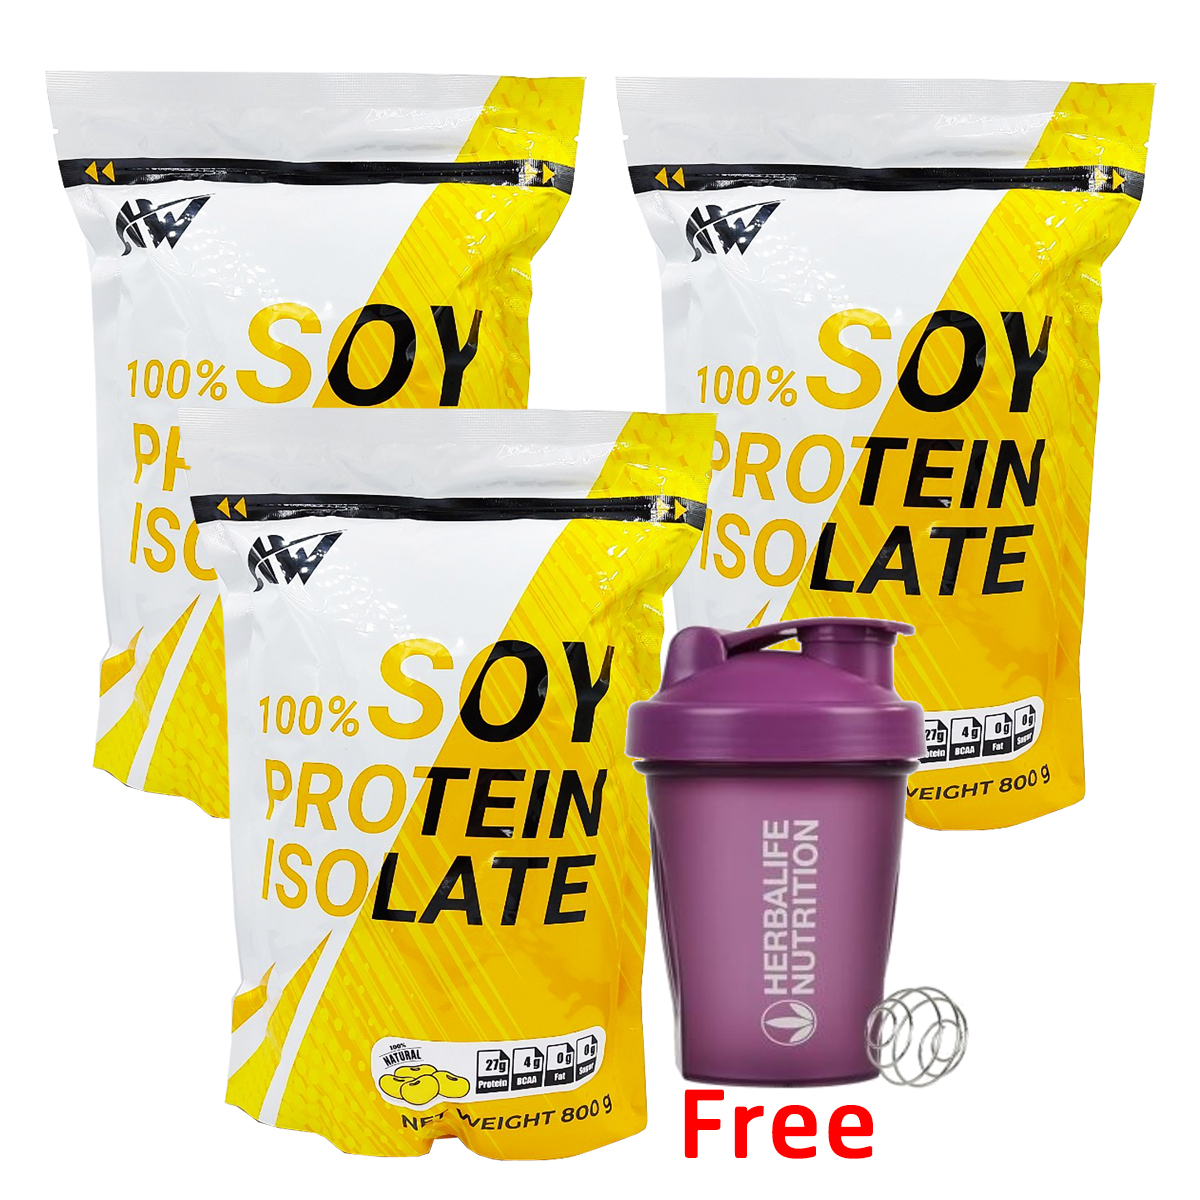 AW-SOY ISOLATE X3 ซอยโปรตีน โปรตีนถั่วเหลือง Soy Protein โปรตีนพืช เวย์ถั่วเหลือง Wheysoy เพิ่มกล้าม ลดไขมัน แพค 800 กรัม จำนวน 3 ถุง แถมฟรีแก้ว